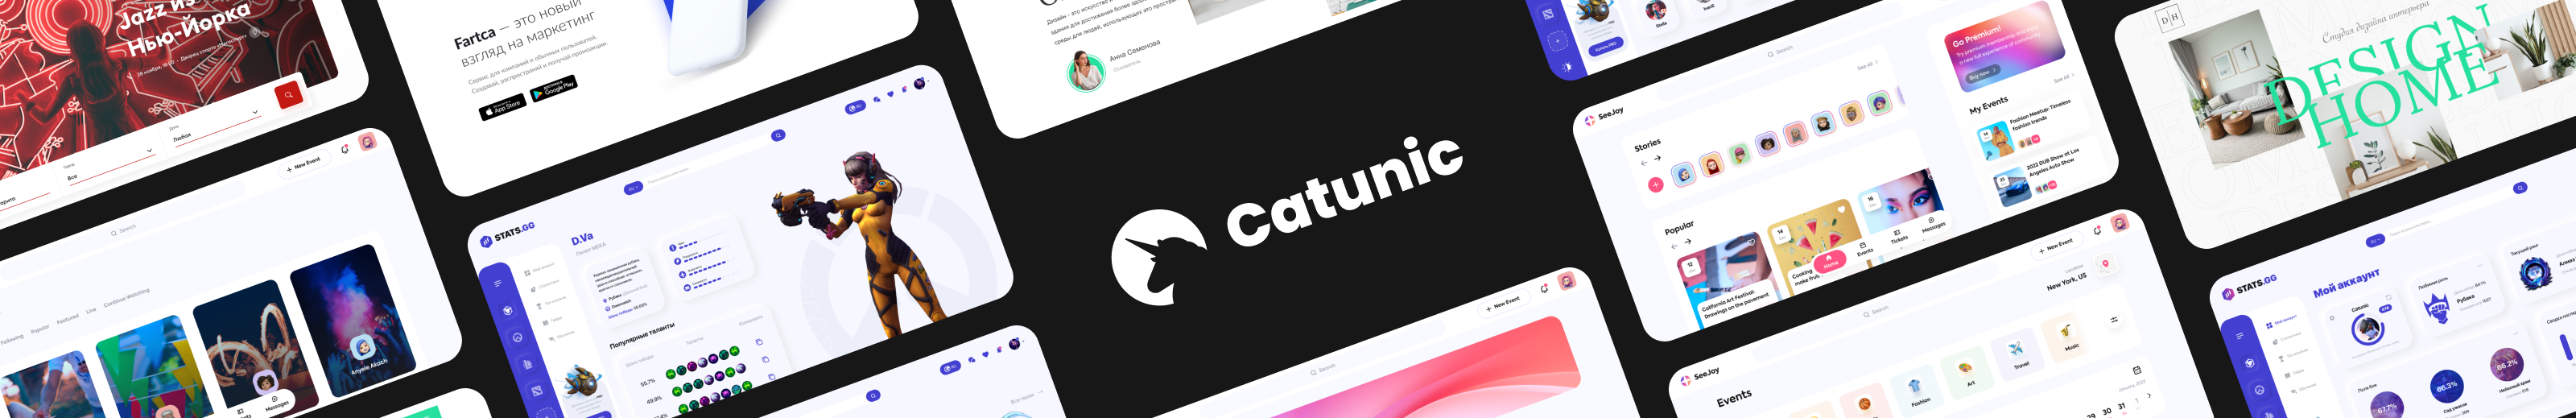 Banner de perfil de Catrina Catunic